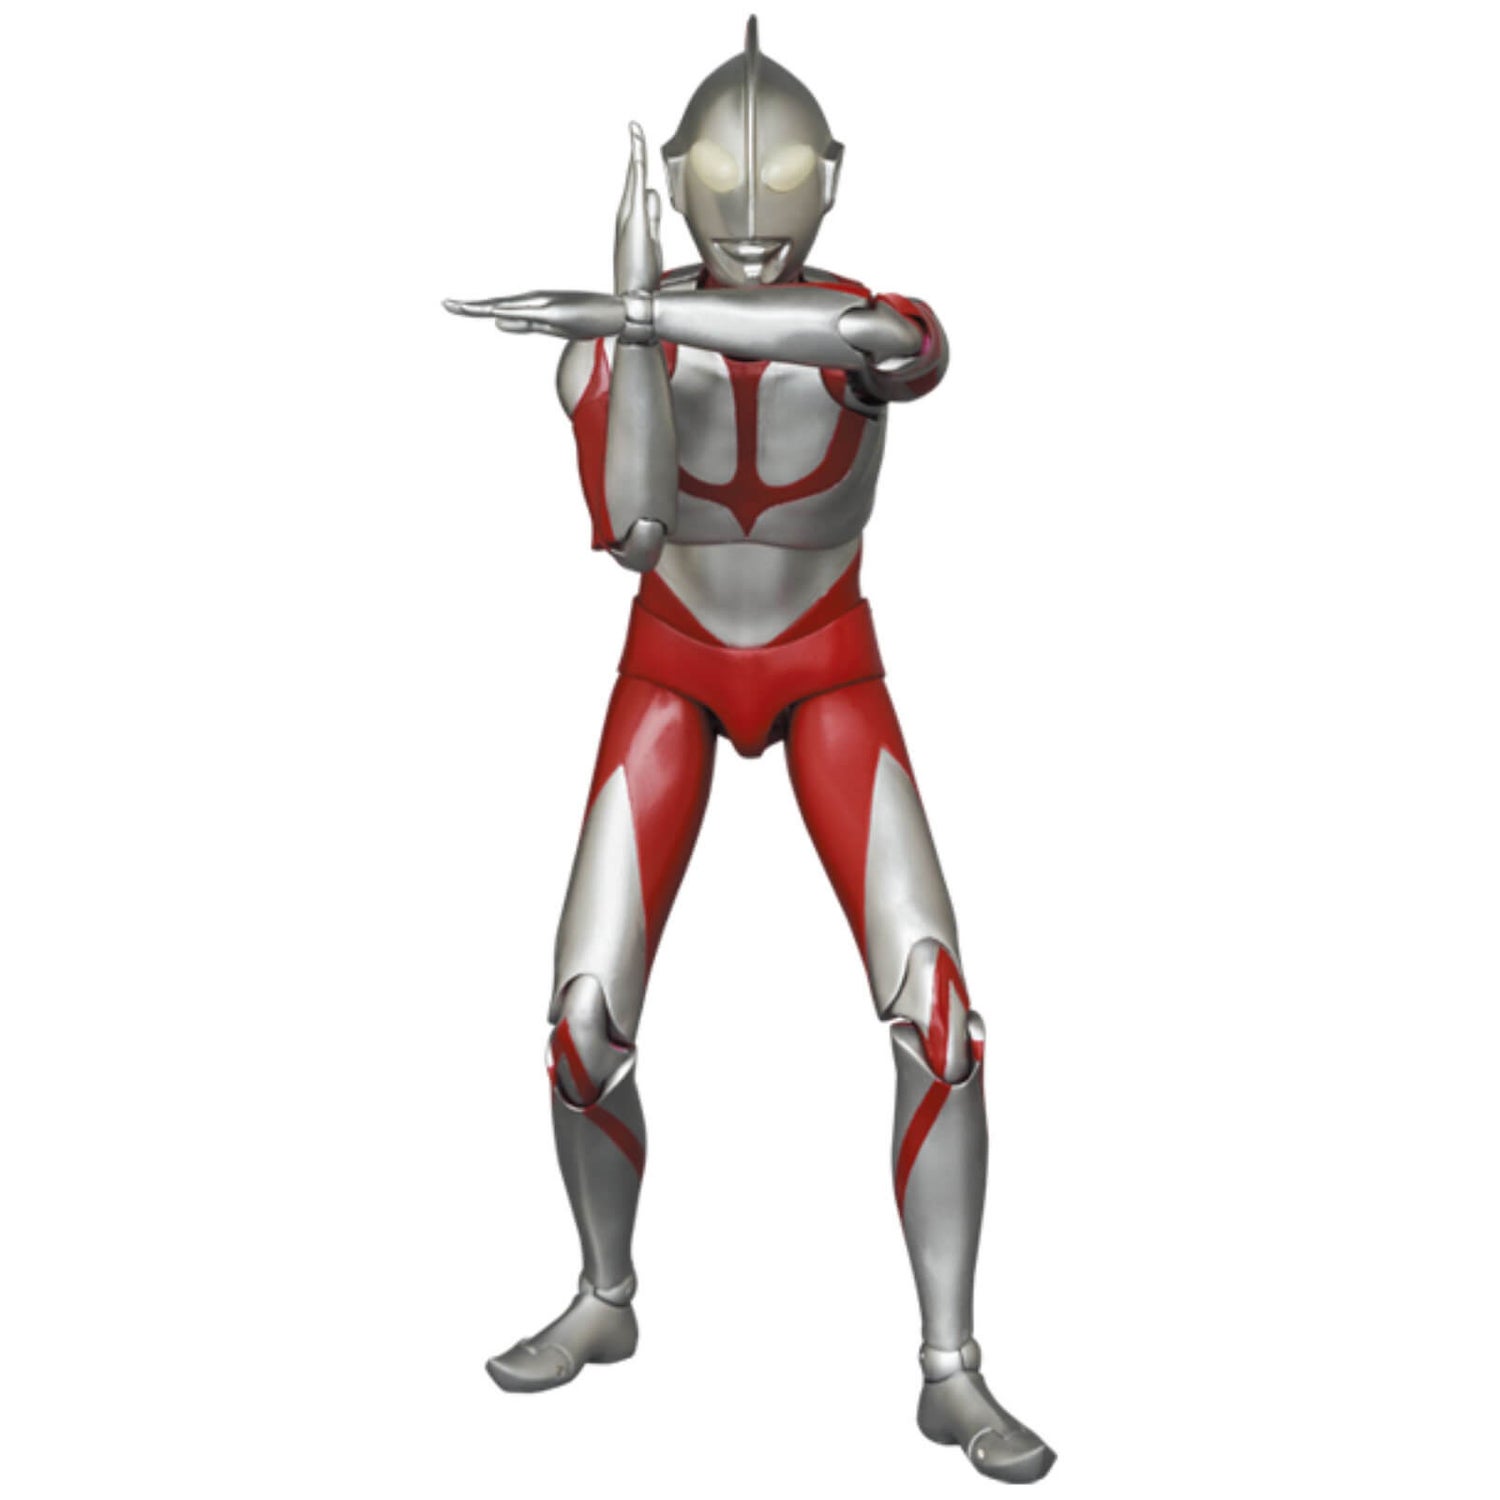 Medicom Shin Ultraman MAFEX Action Figure - Ultraman